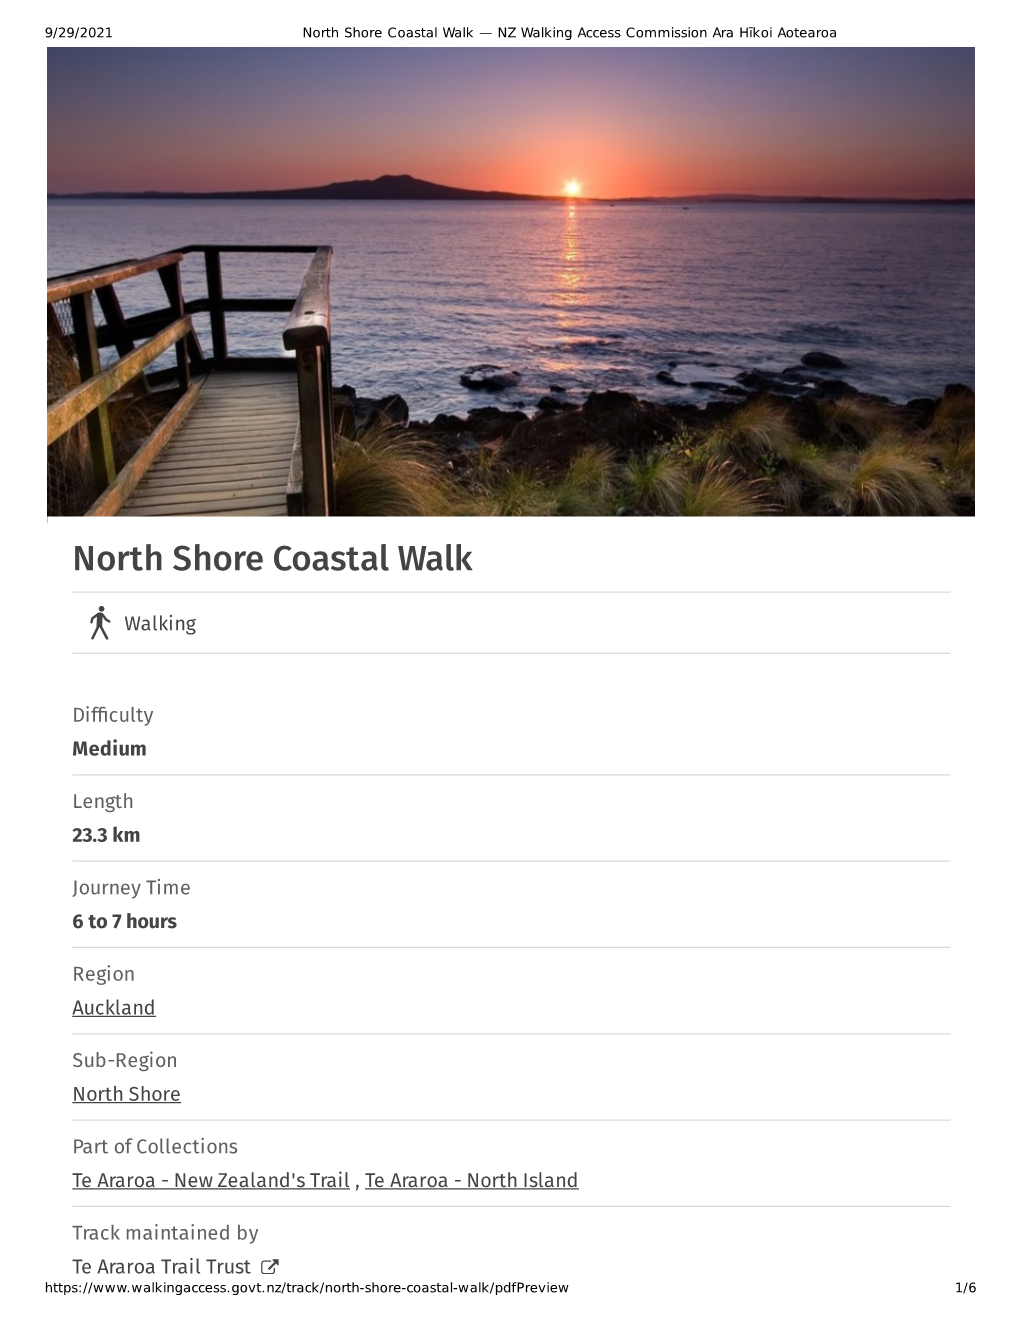 North Shore Coastal Walk — NZ Walking Access Commission Ara Hīkoi Aotearoa